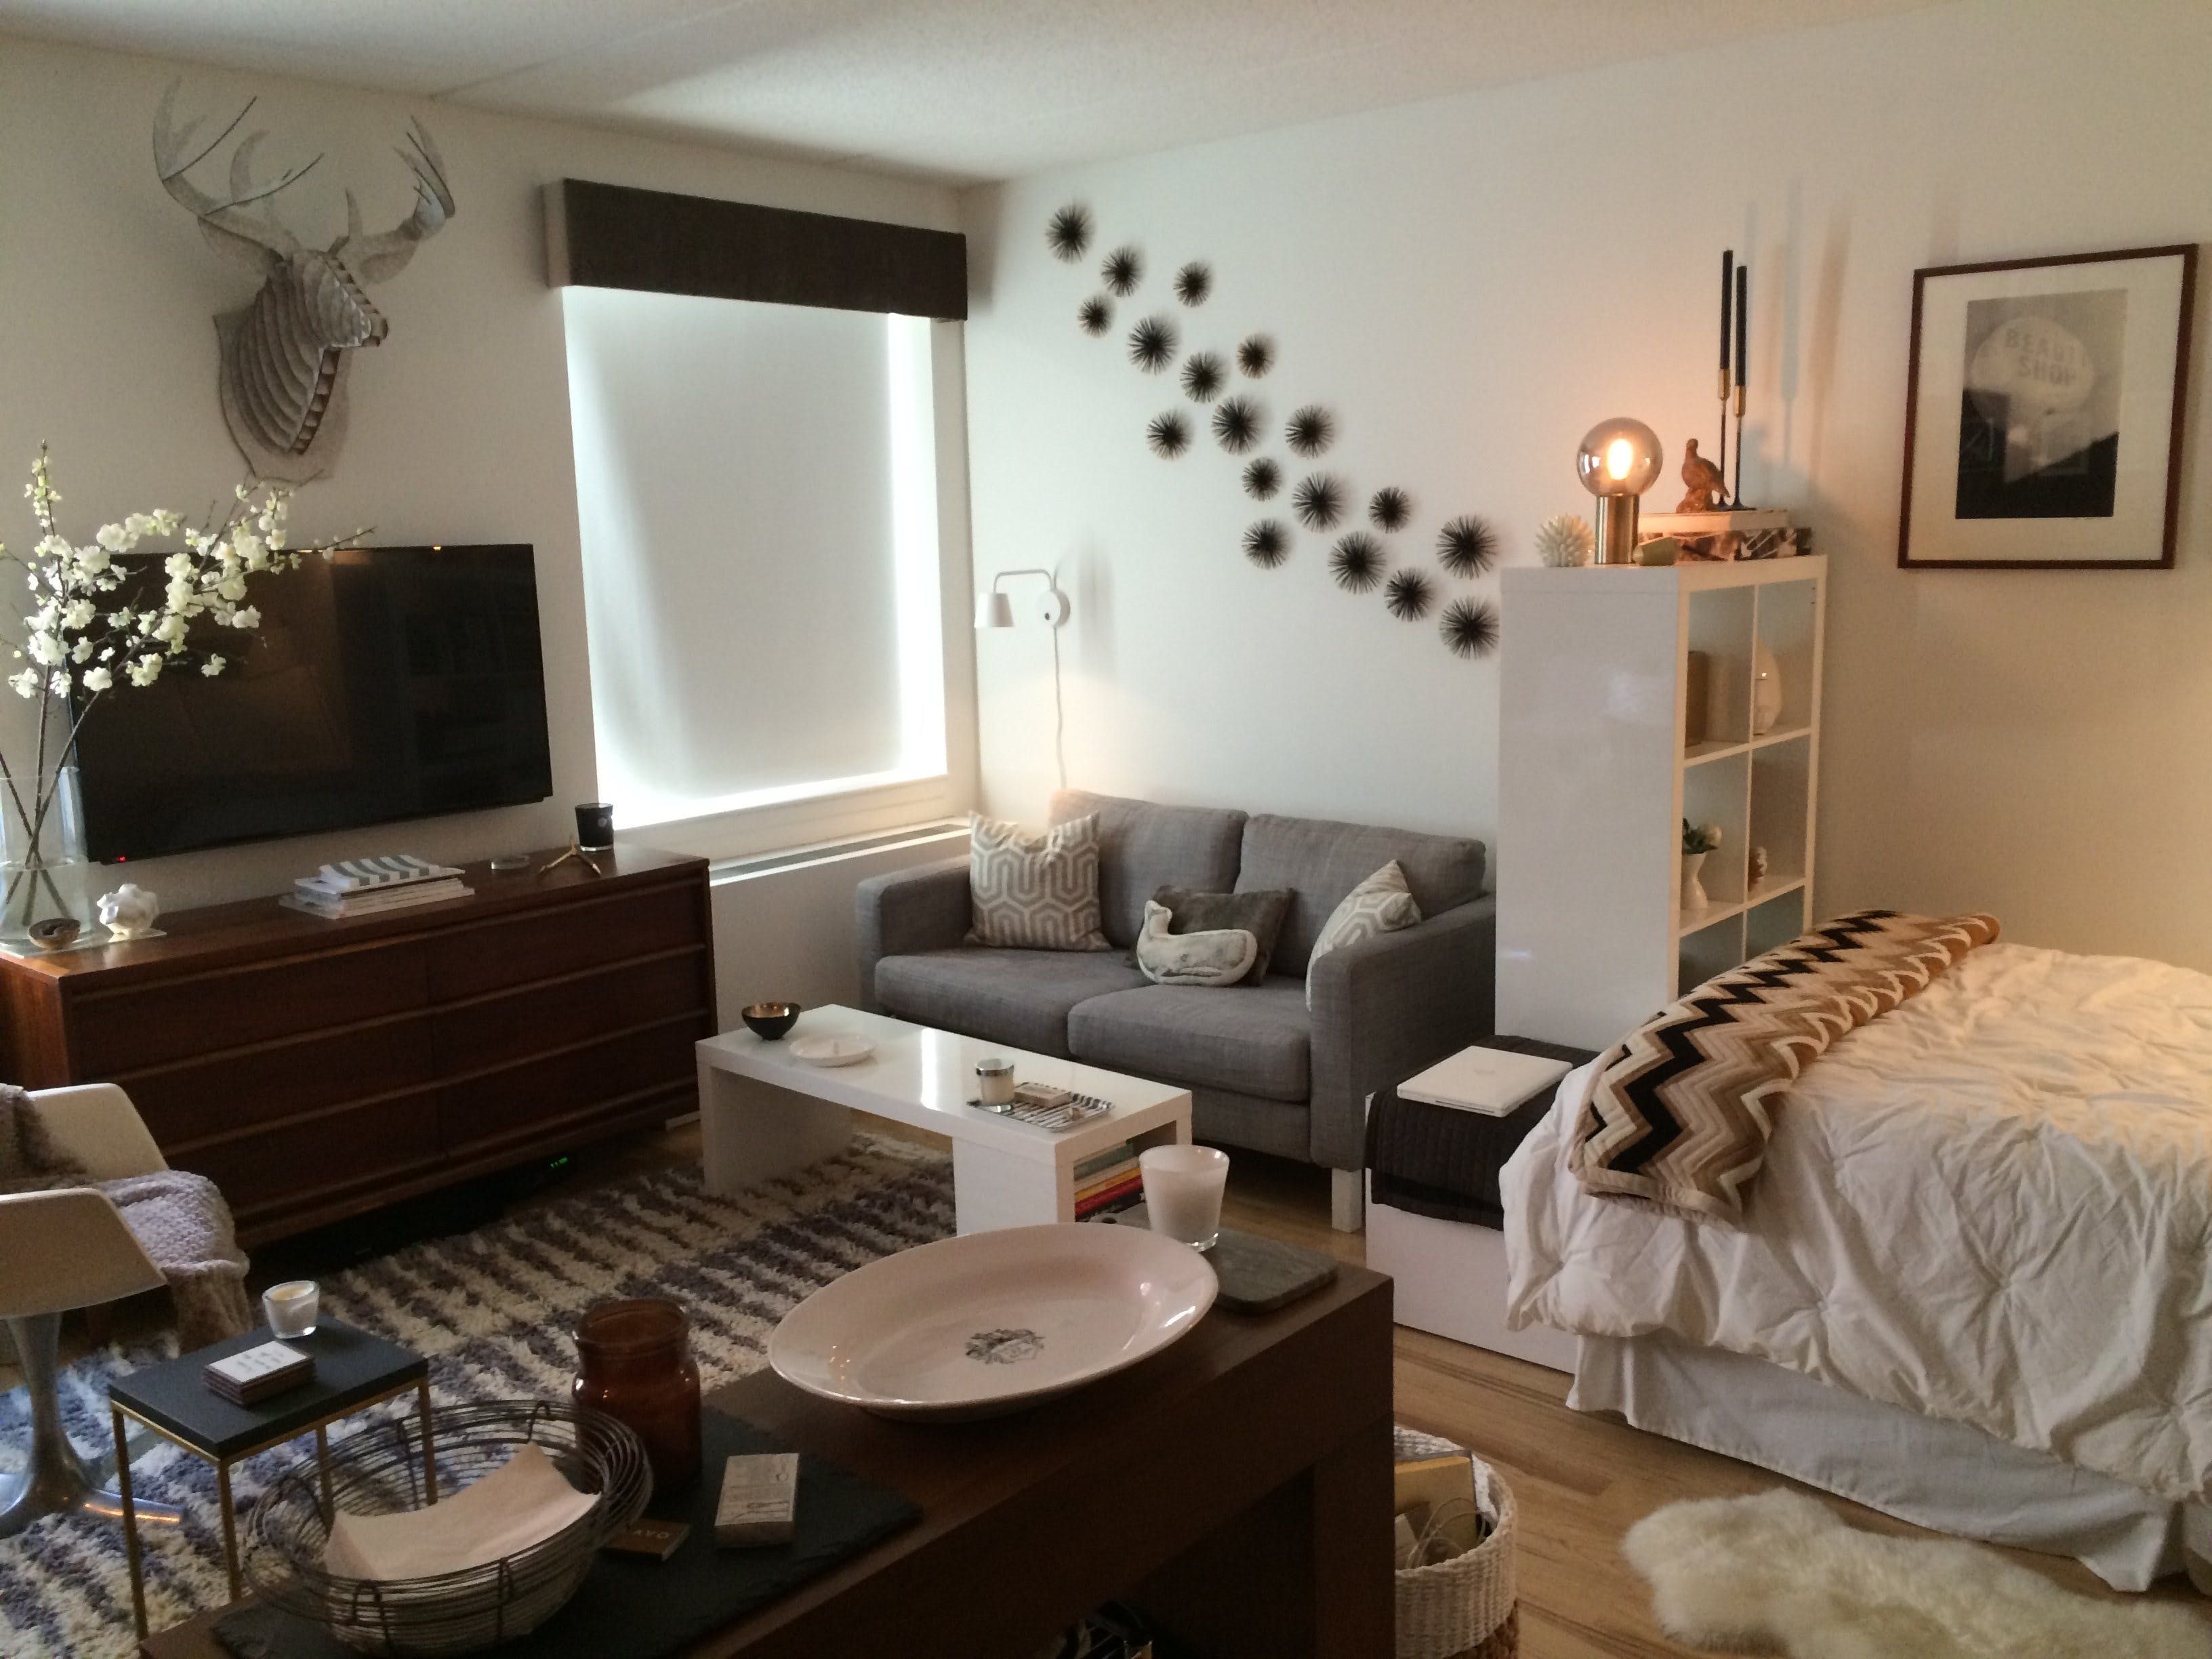 Space saving Furniture For Studio Apartments